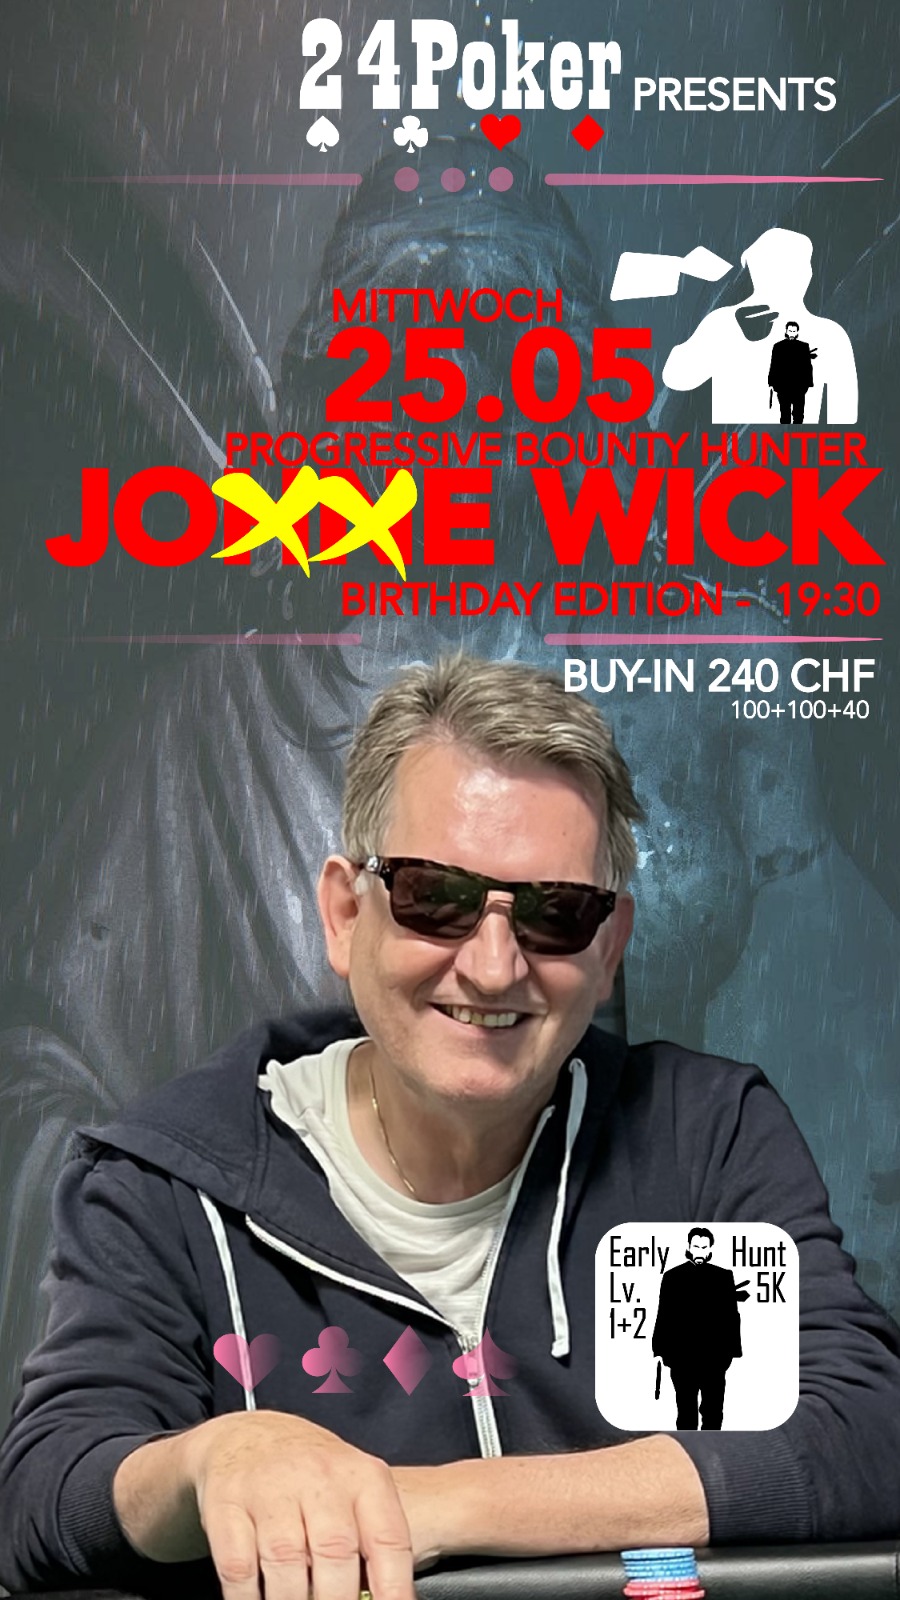 JohnWick am Donnerstag mit 52 Entries & 5-Way-Deal